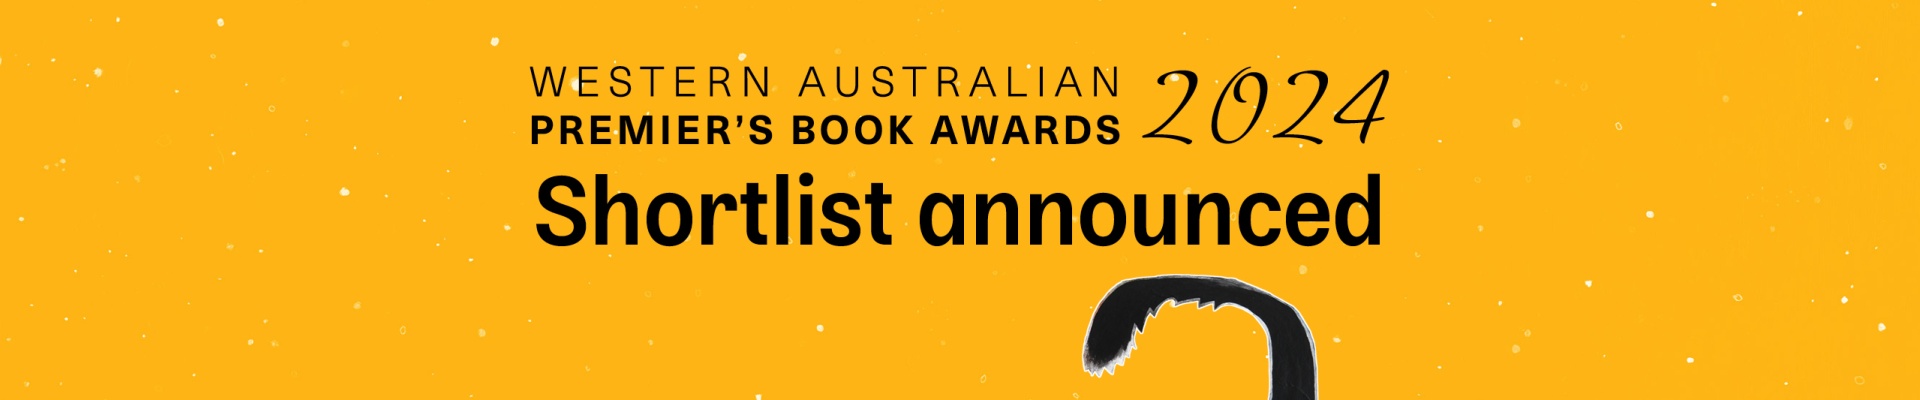 Premiers Book Awards 2024 Shortlist announced